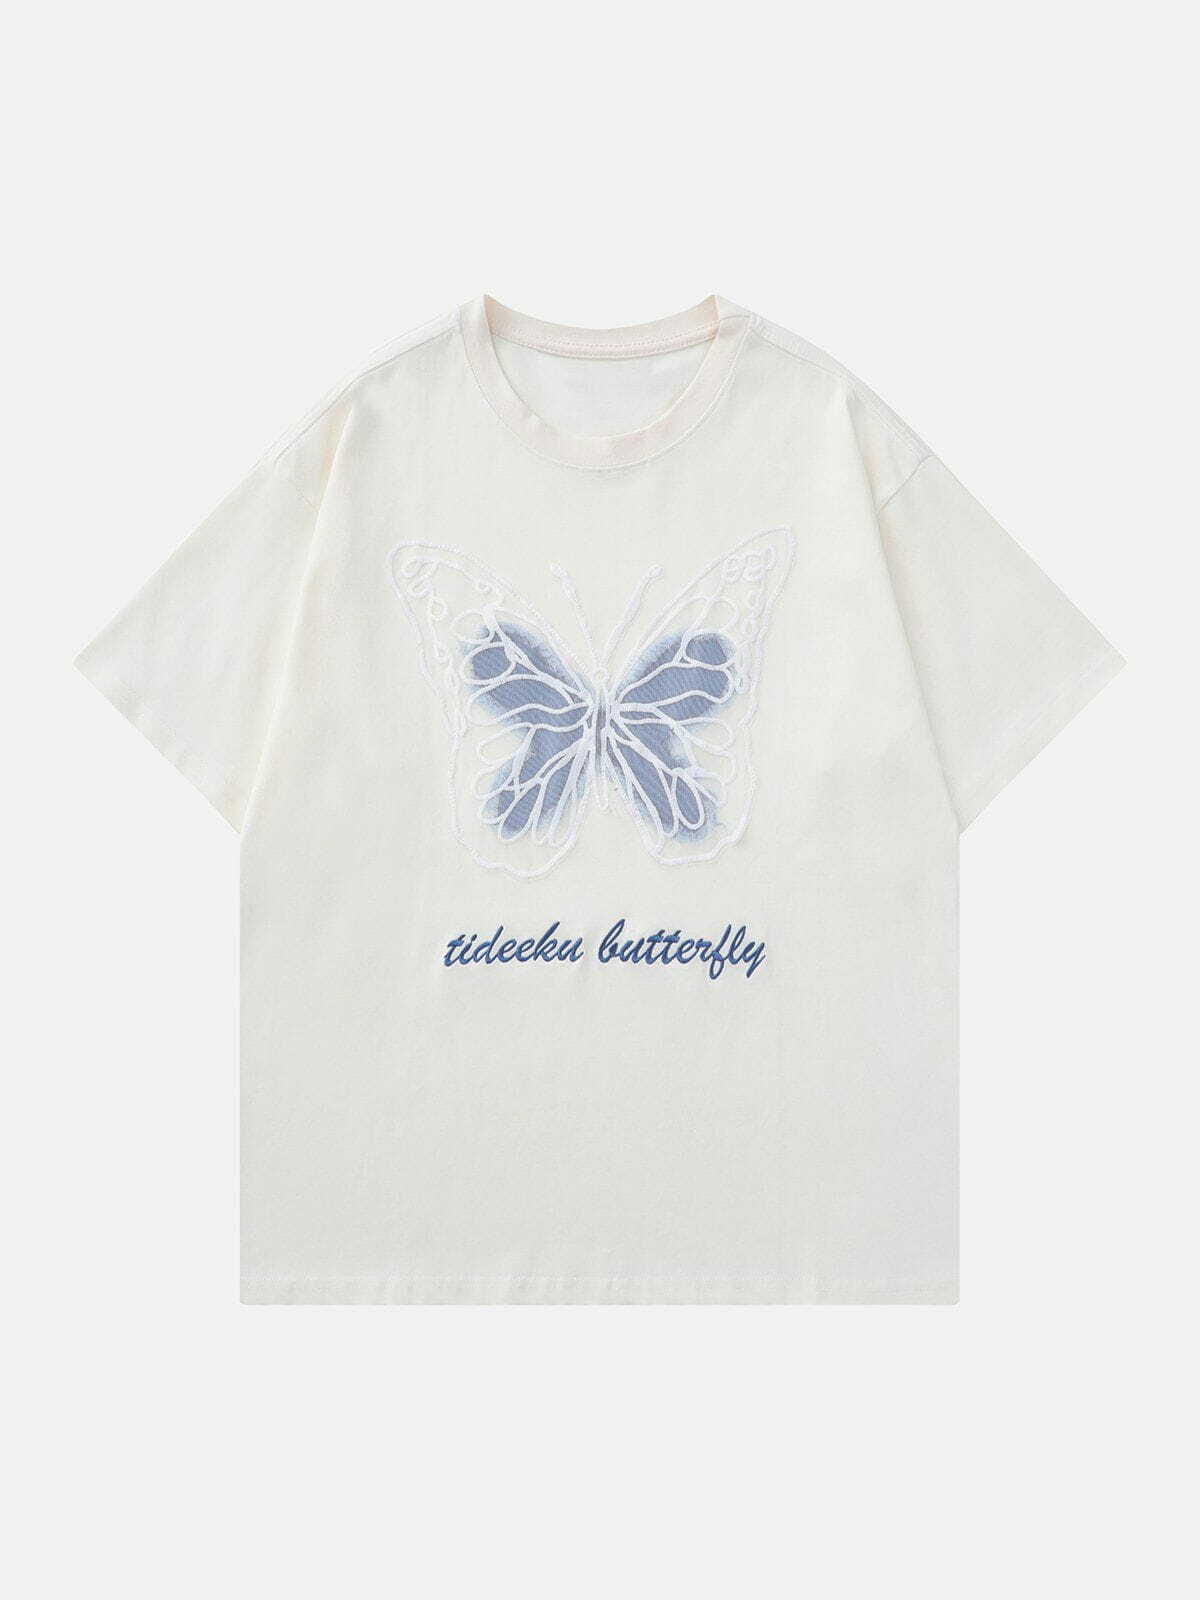 hollow mesh butterfly tee edgy  retro streetwear statement 4634